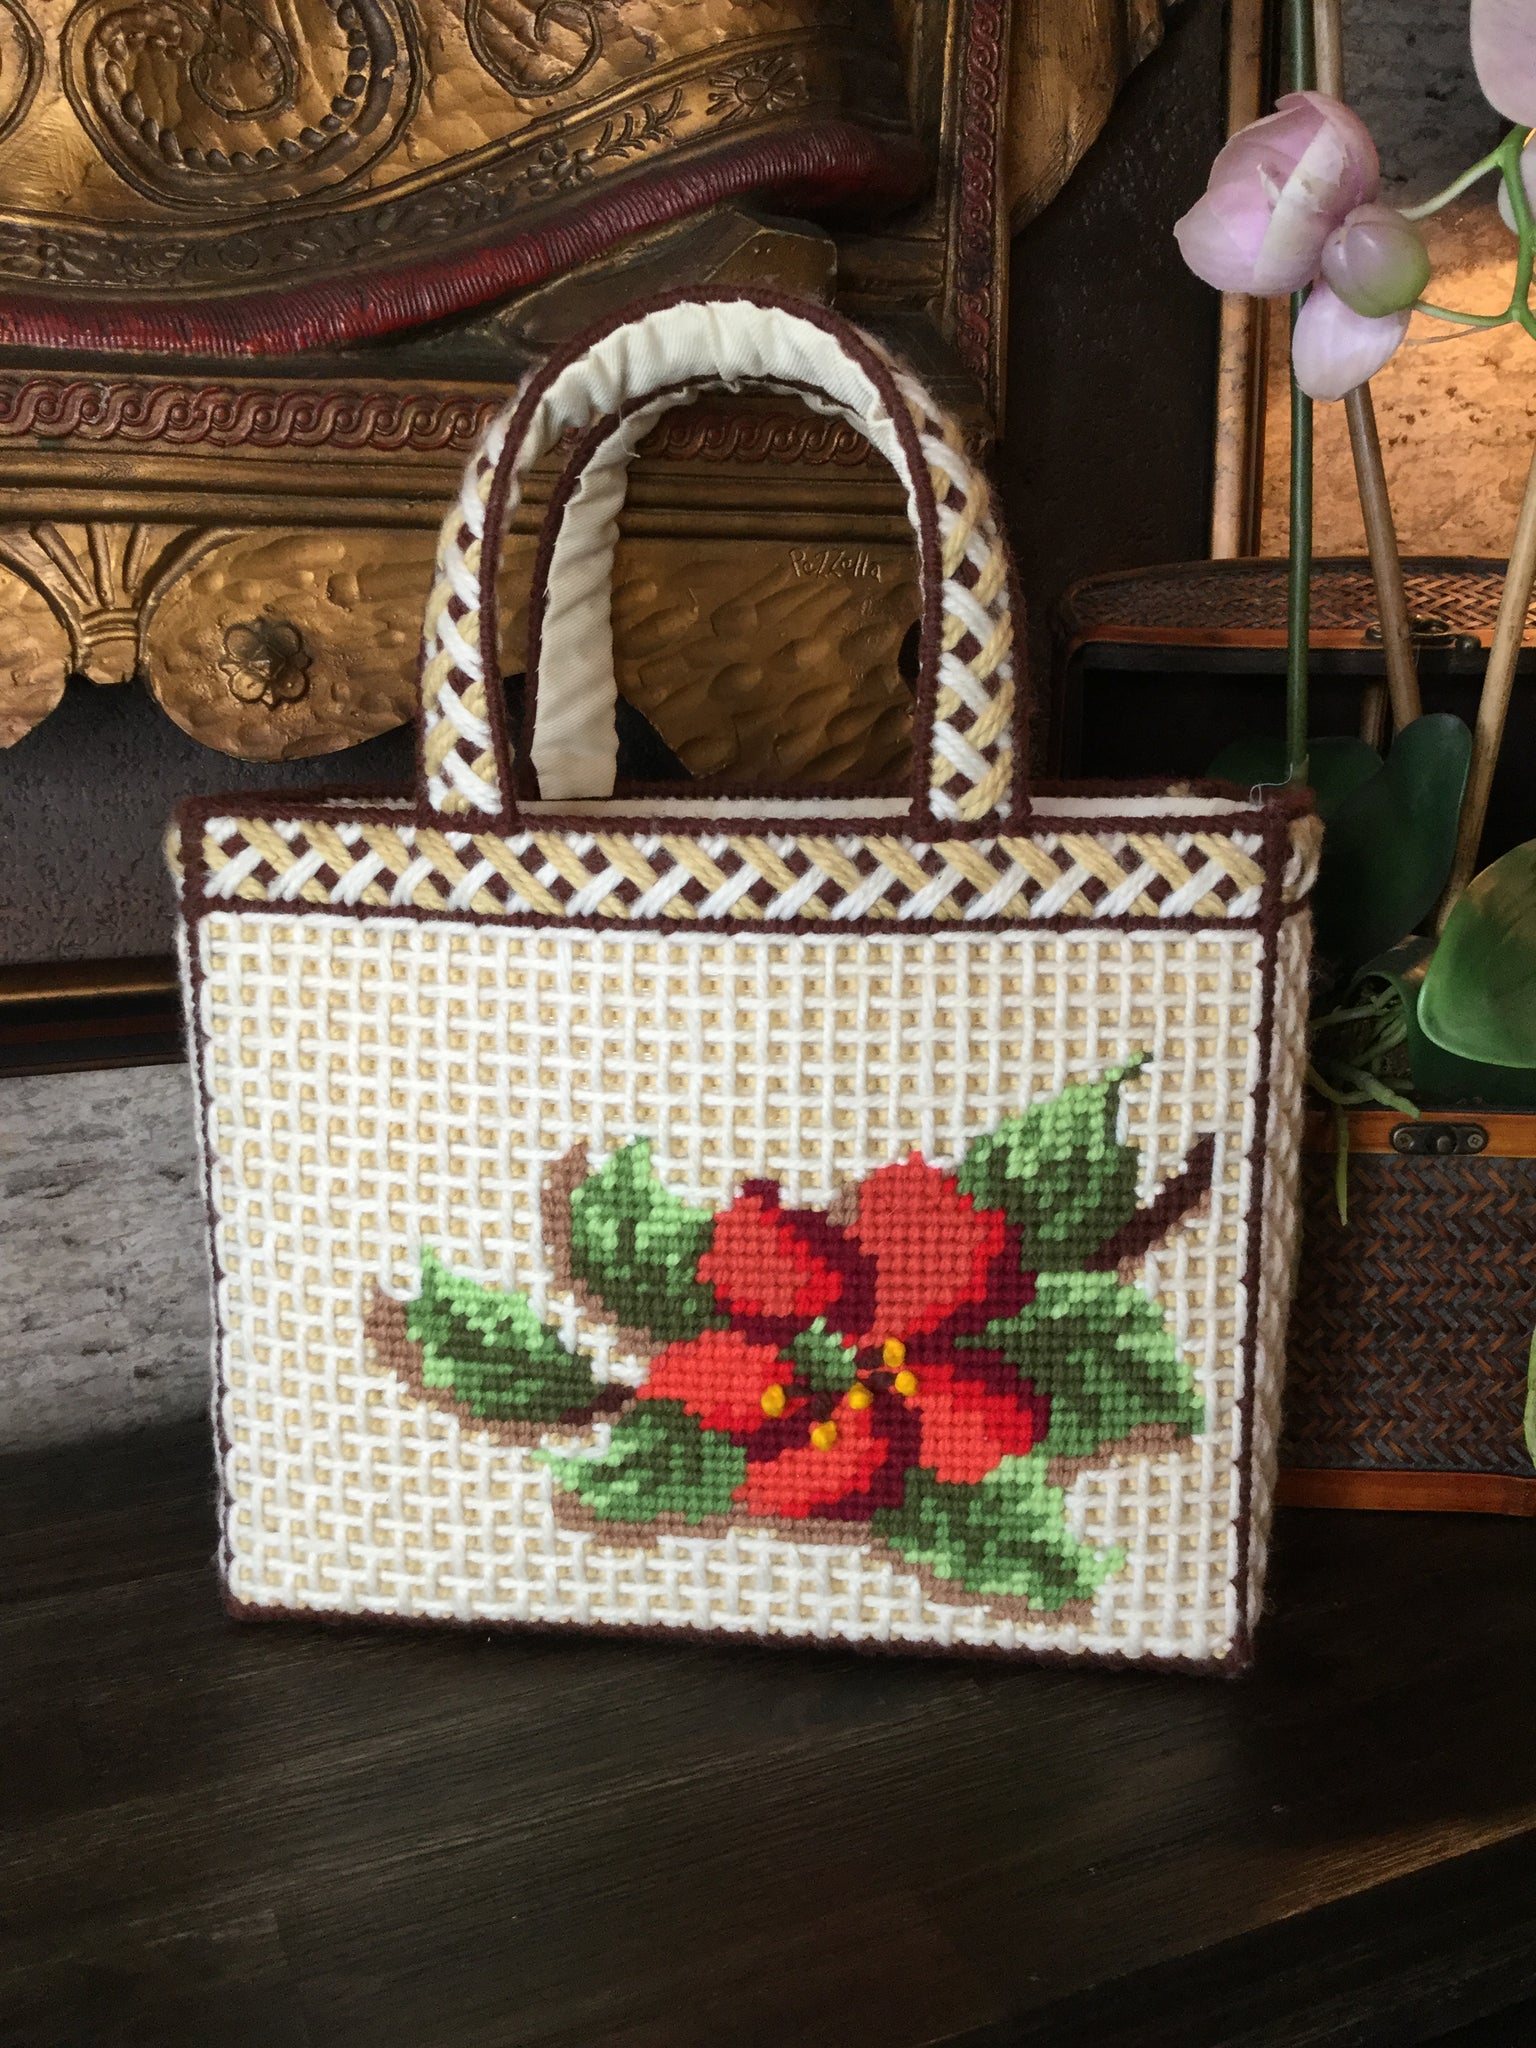 Vintage embroidered tote handbag